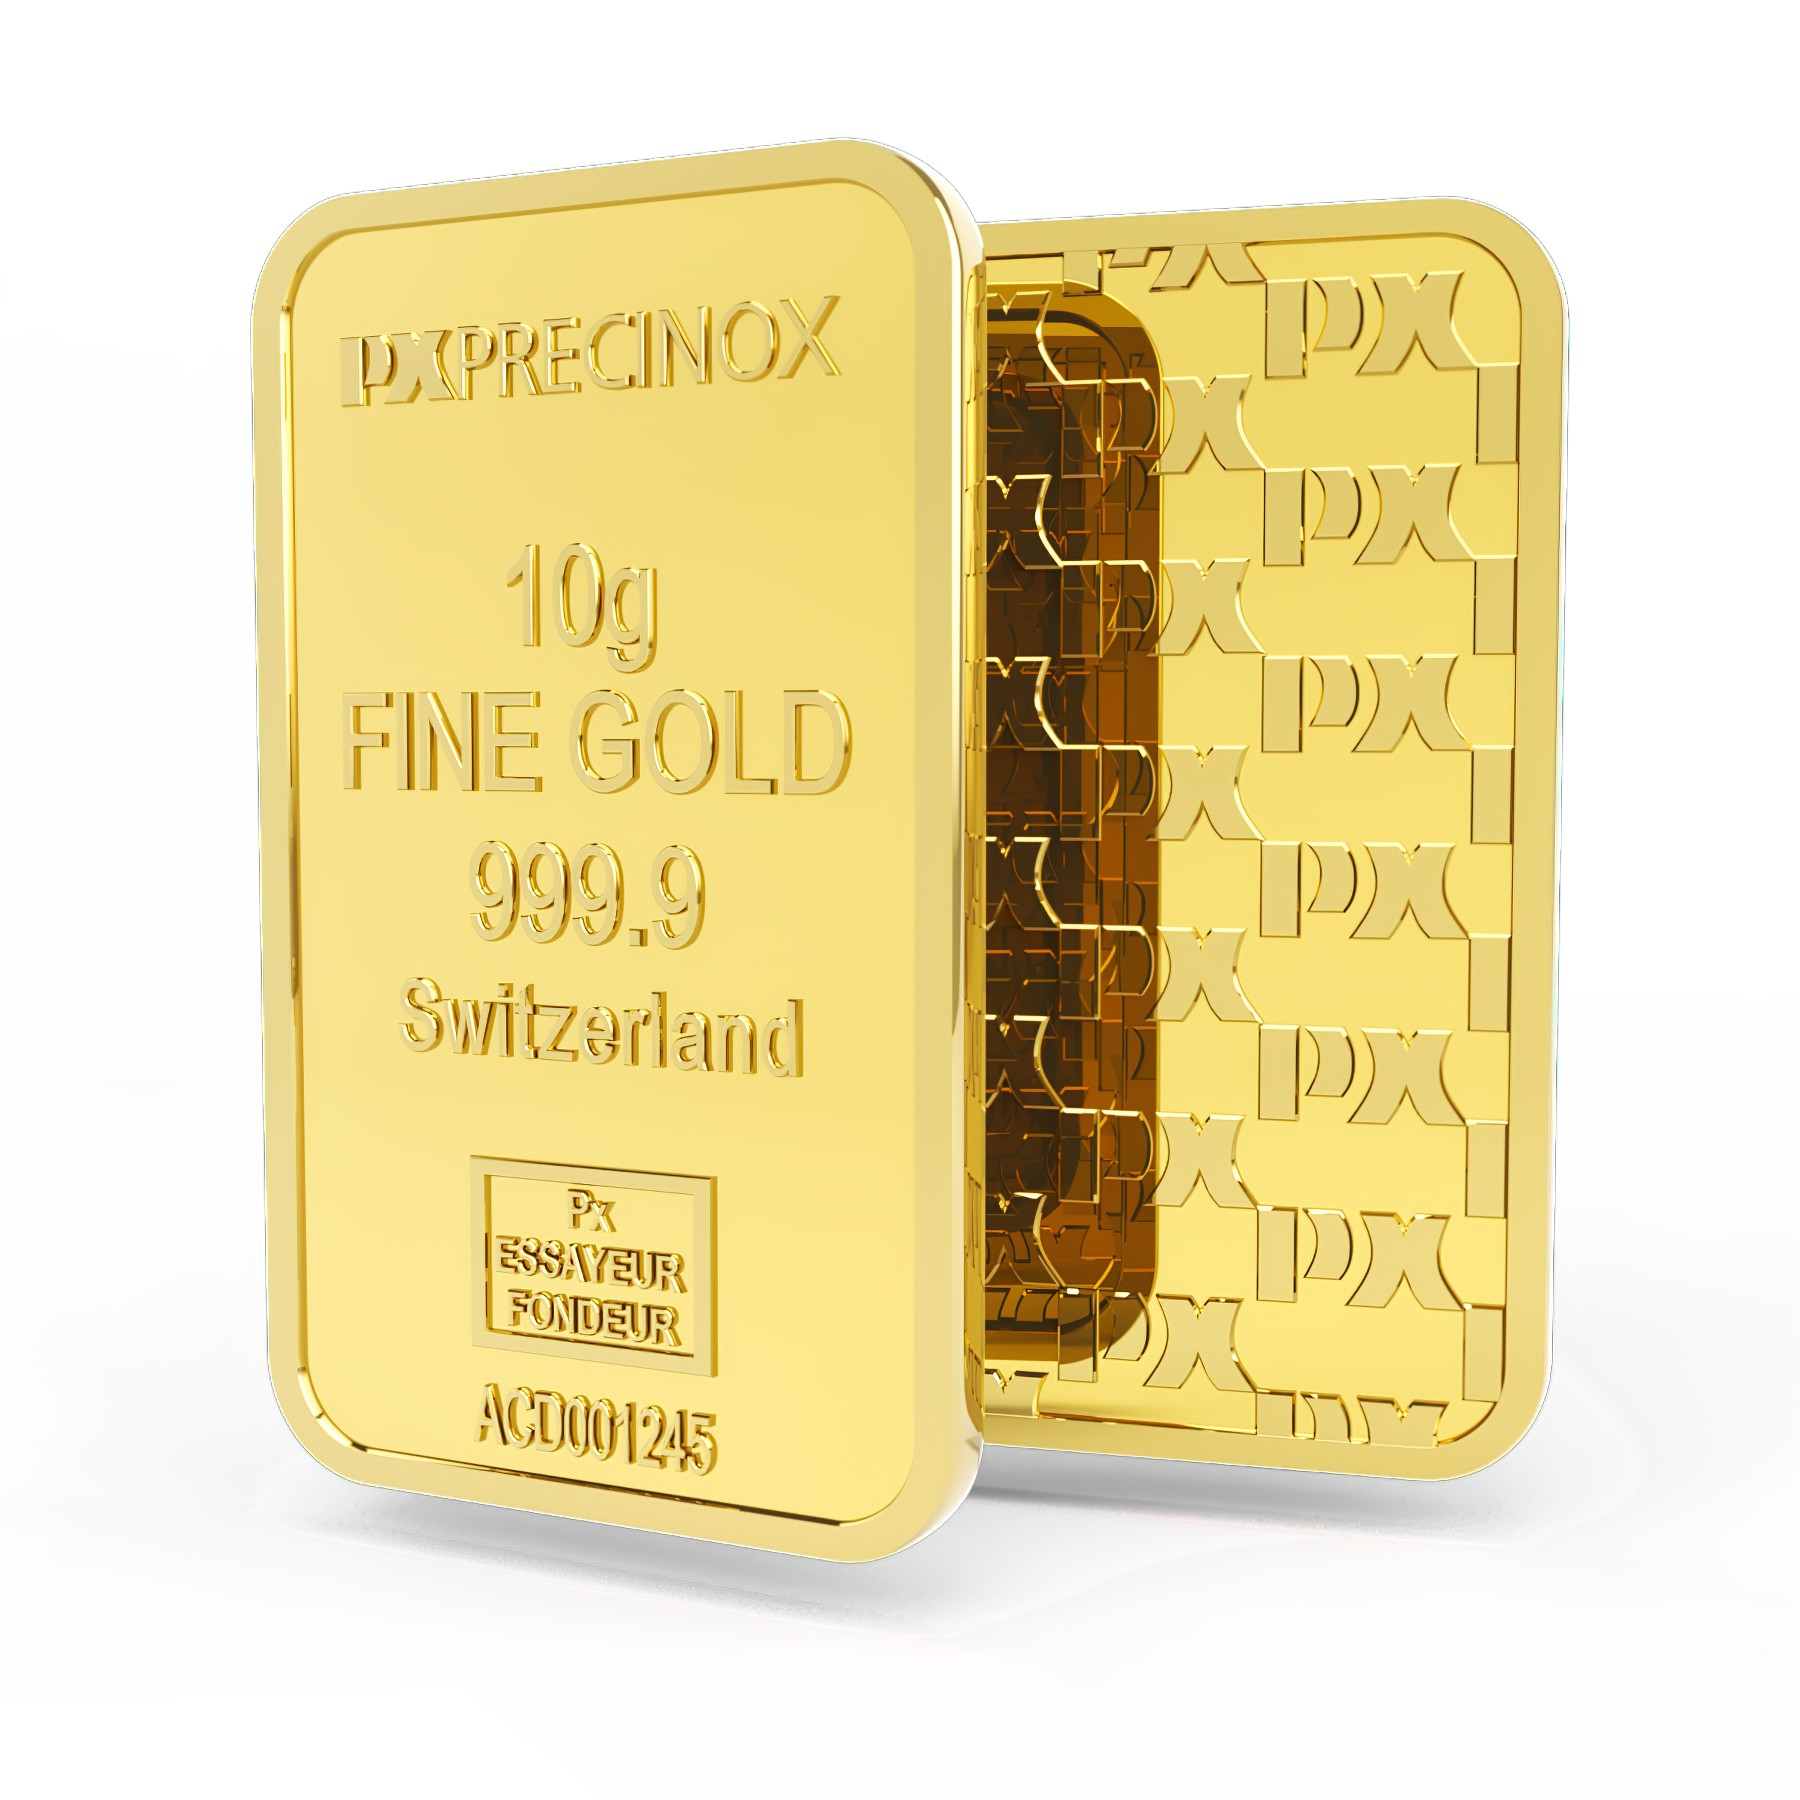 Lingou aur 10 gr, Elvetia, Fine Gold 999,9